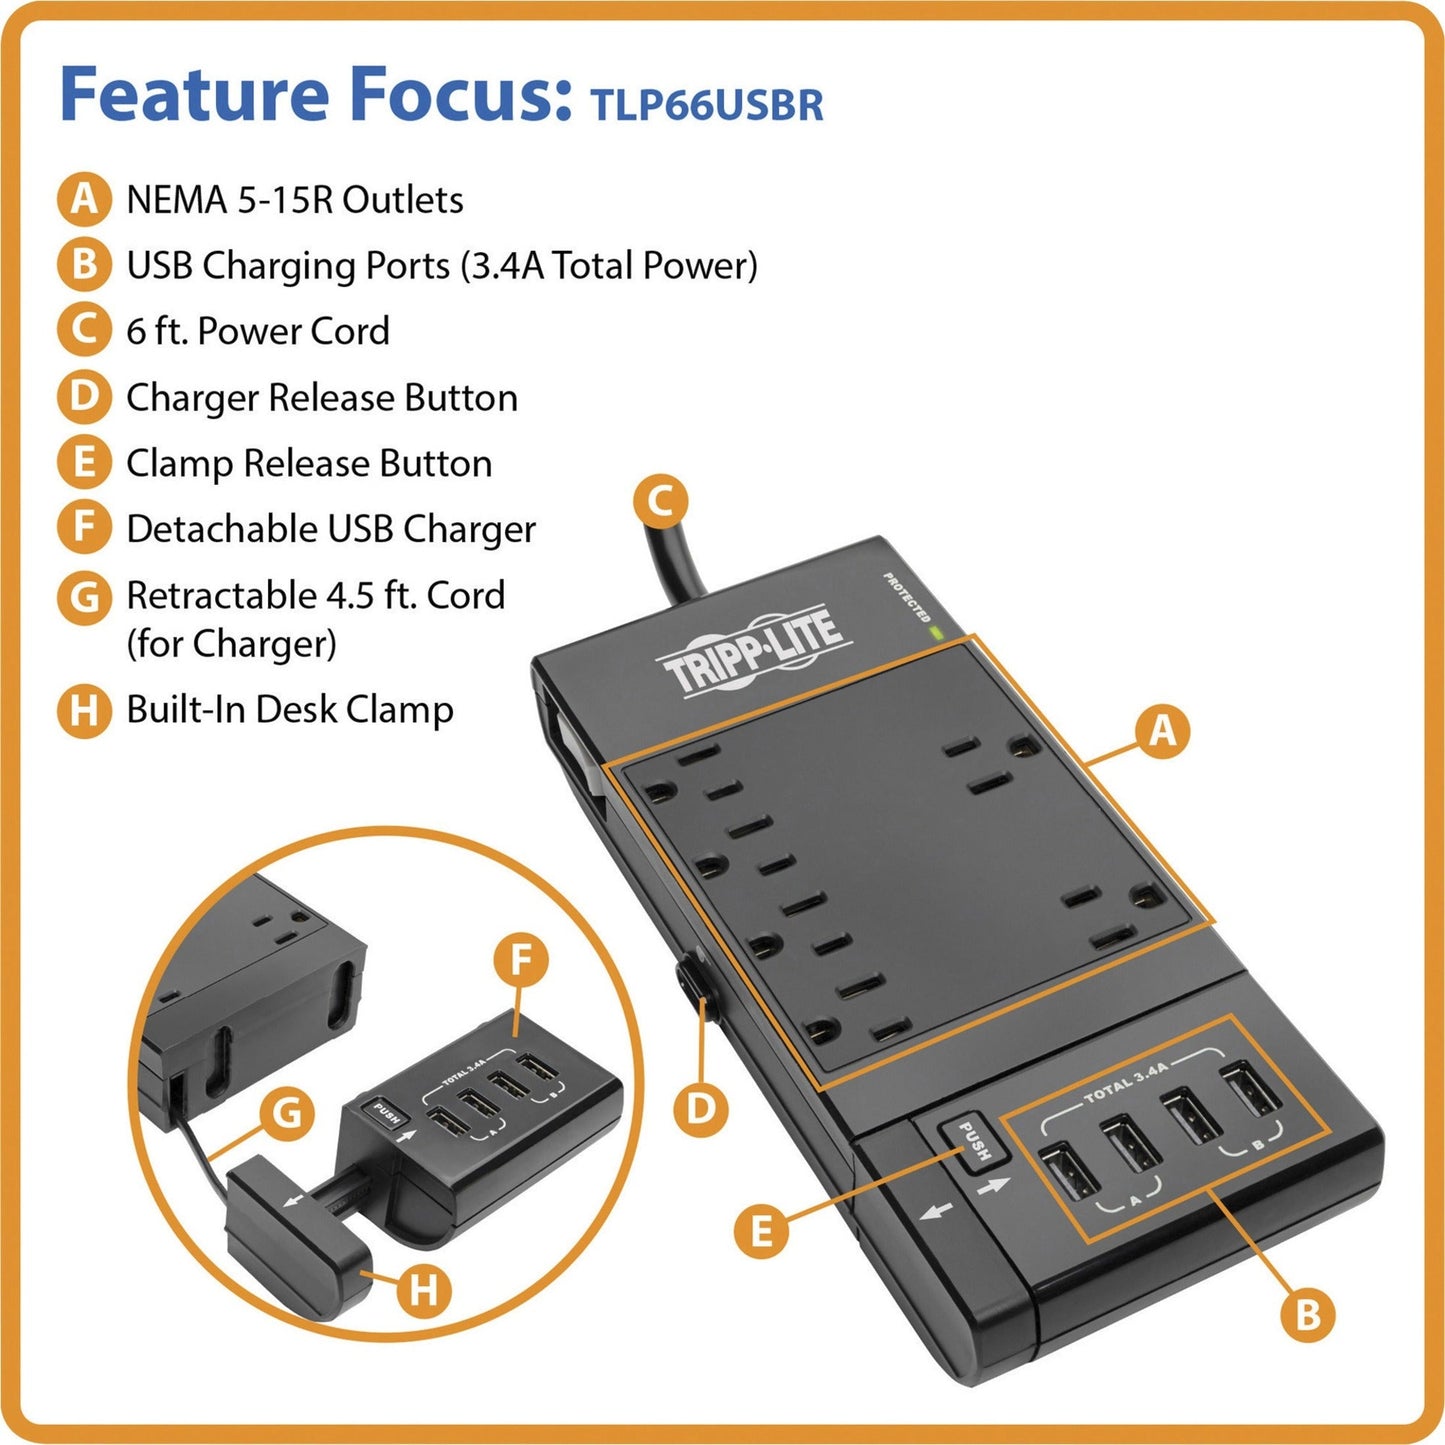 Tripp Lite Protect It! 6-Outlet Surge Protector 4 USB Ports 6 ft. Cord 1080 Joules Diagnostic LED Black Housing